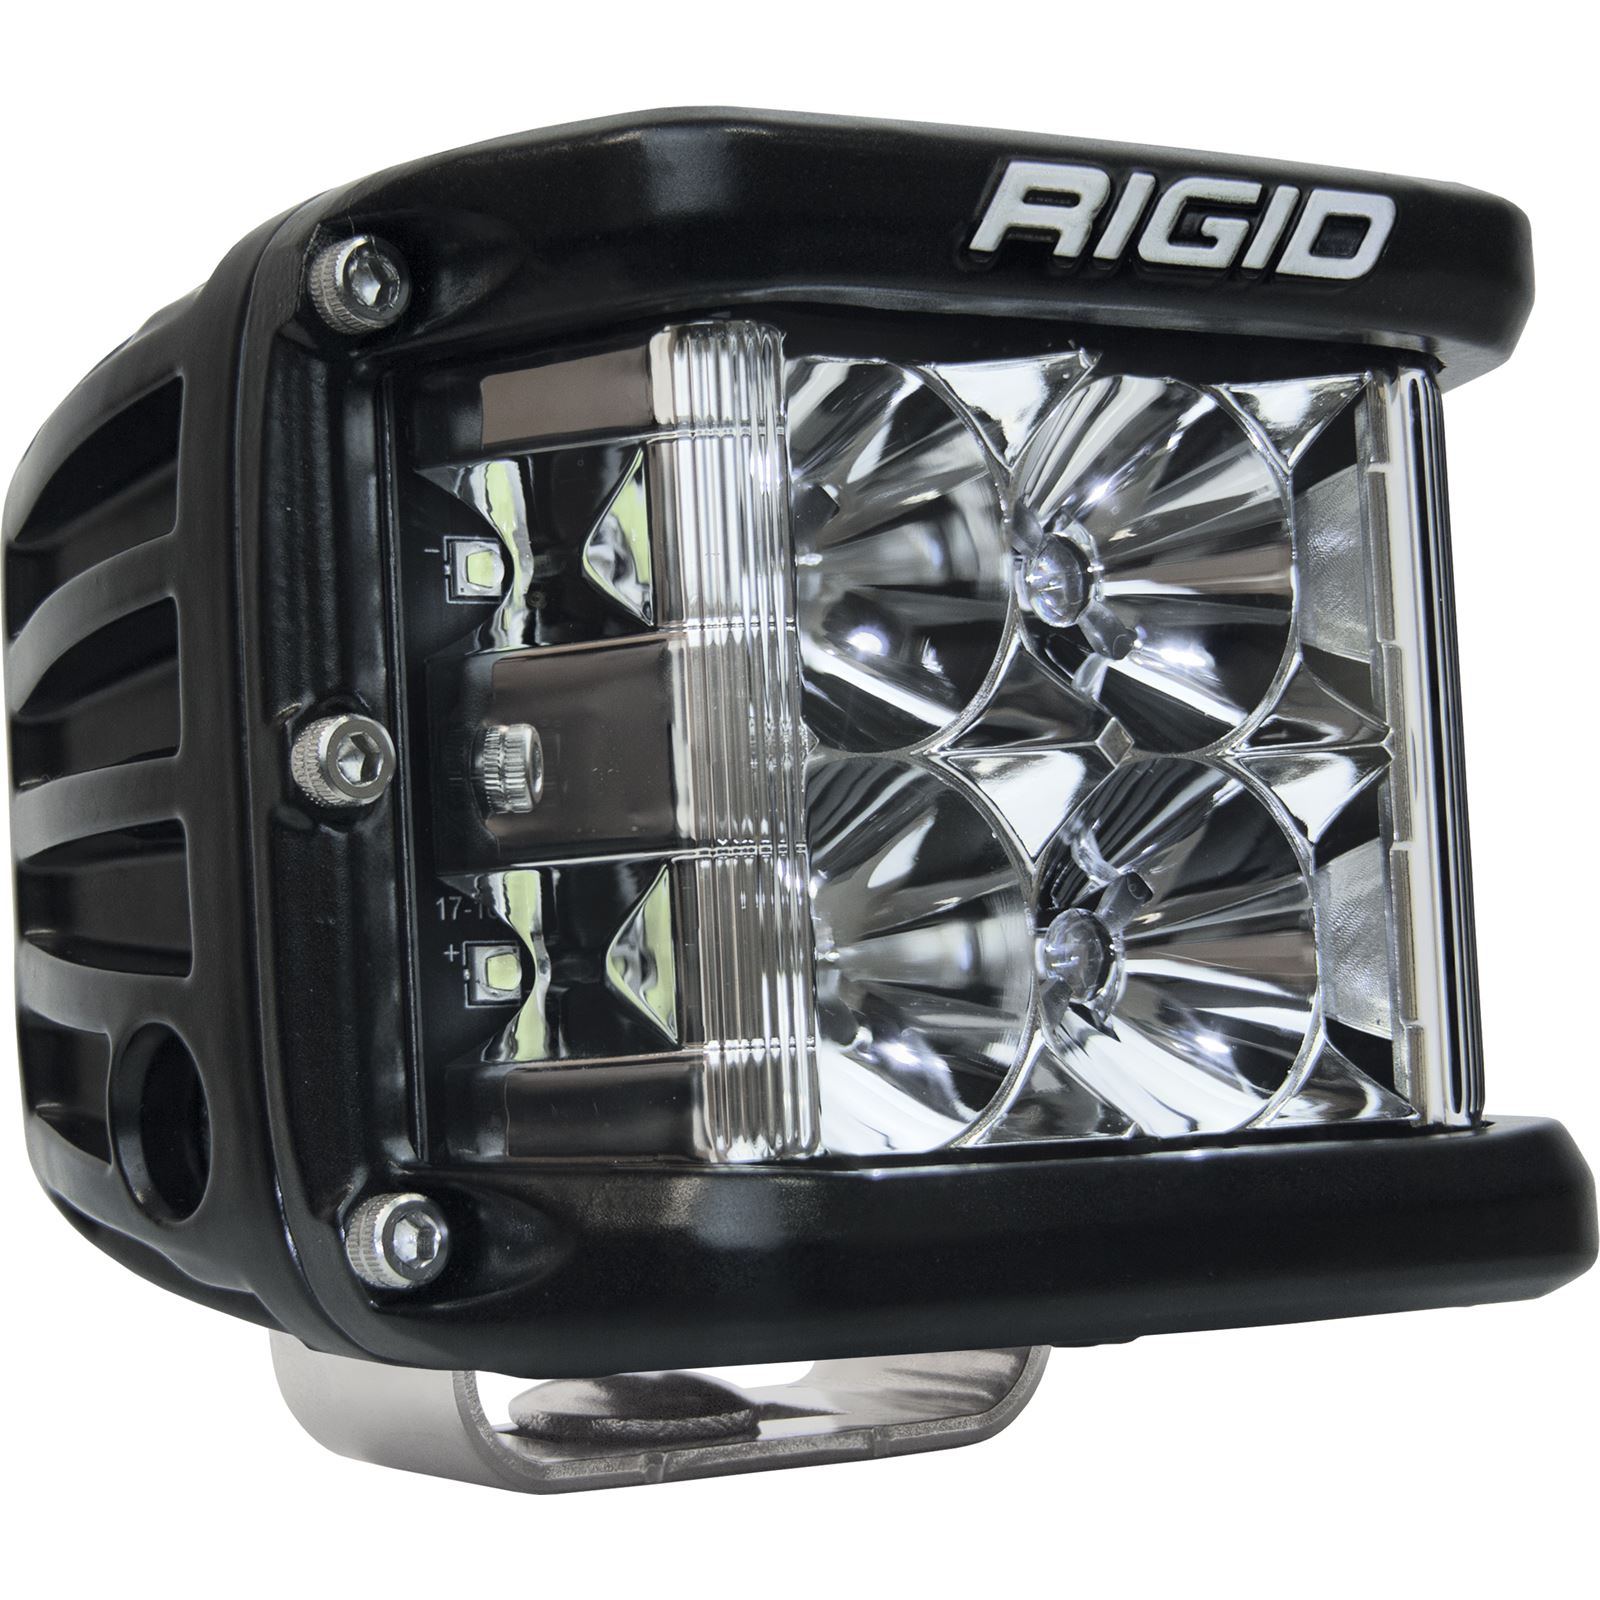 Rigid D-SS Pro Series Light